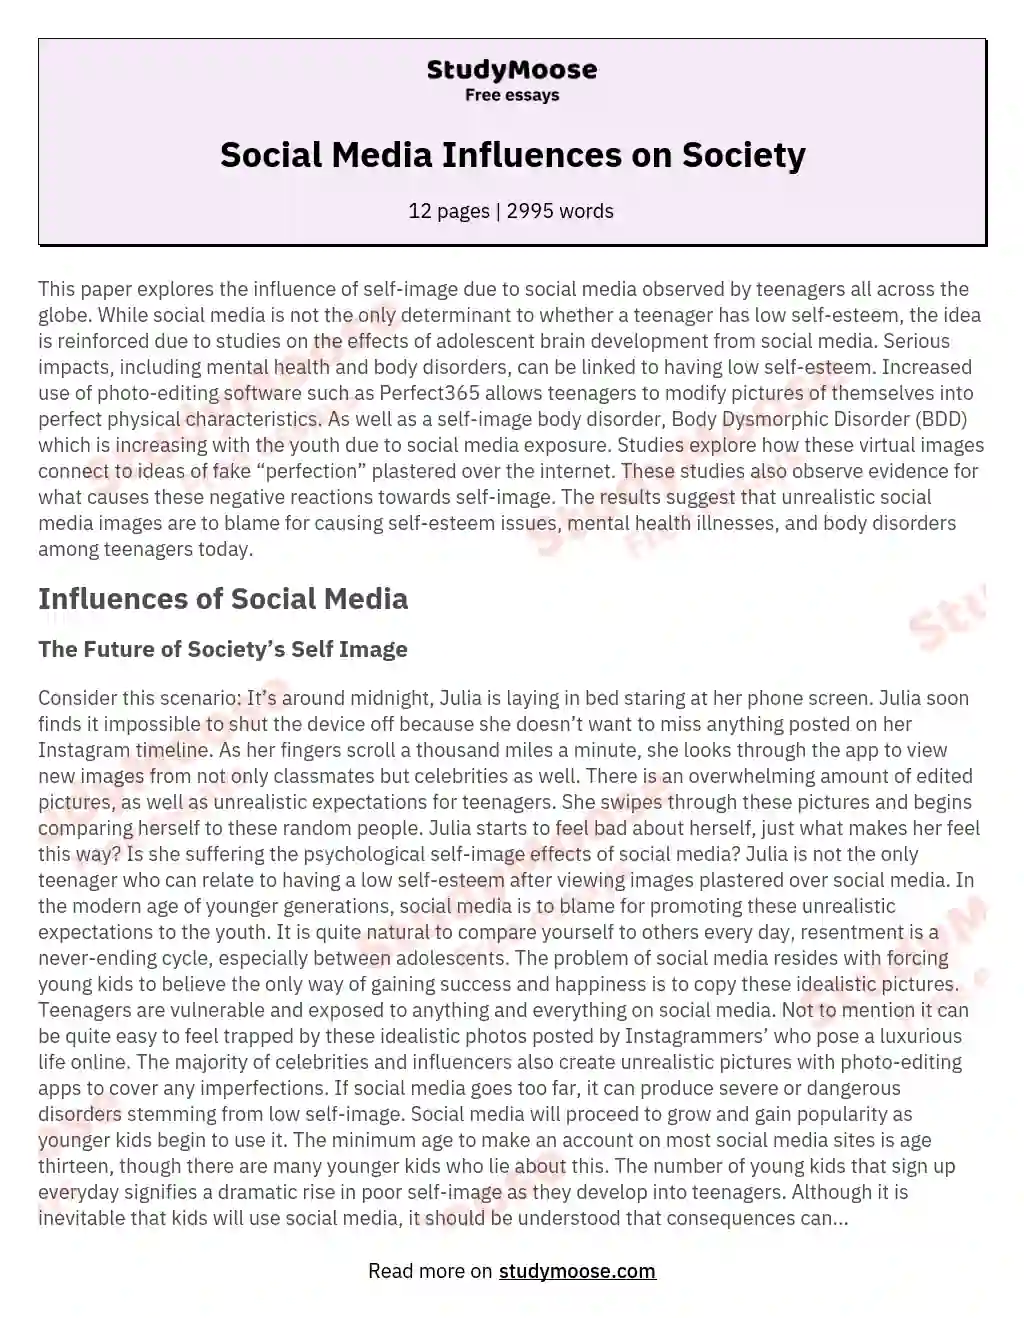 Social Media Influences on Society essay